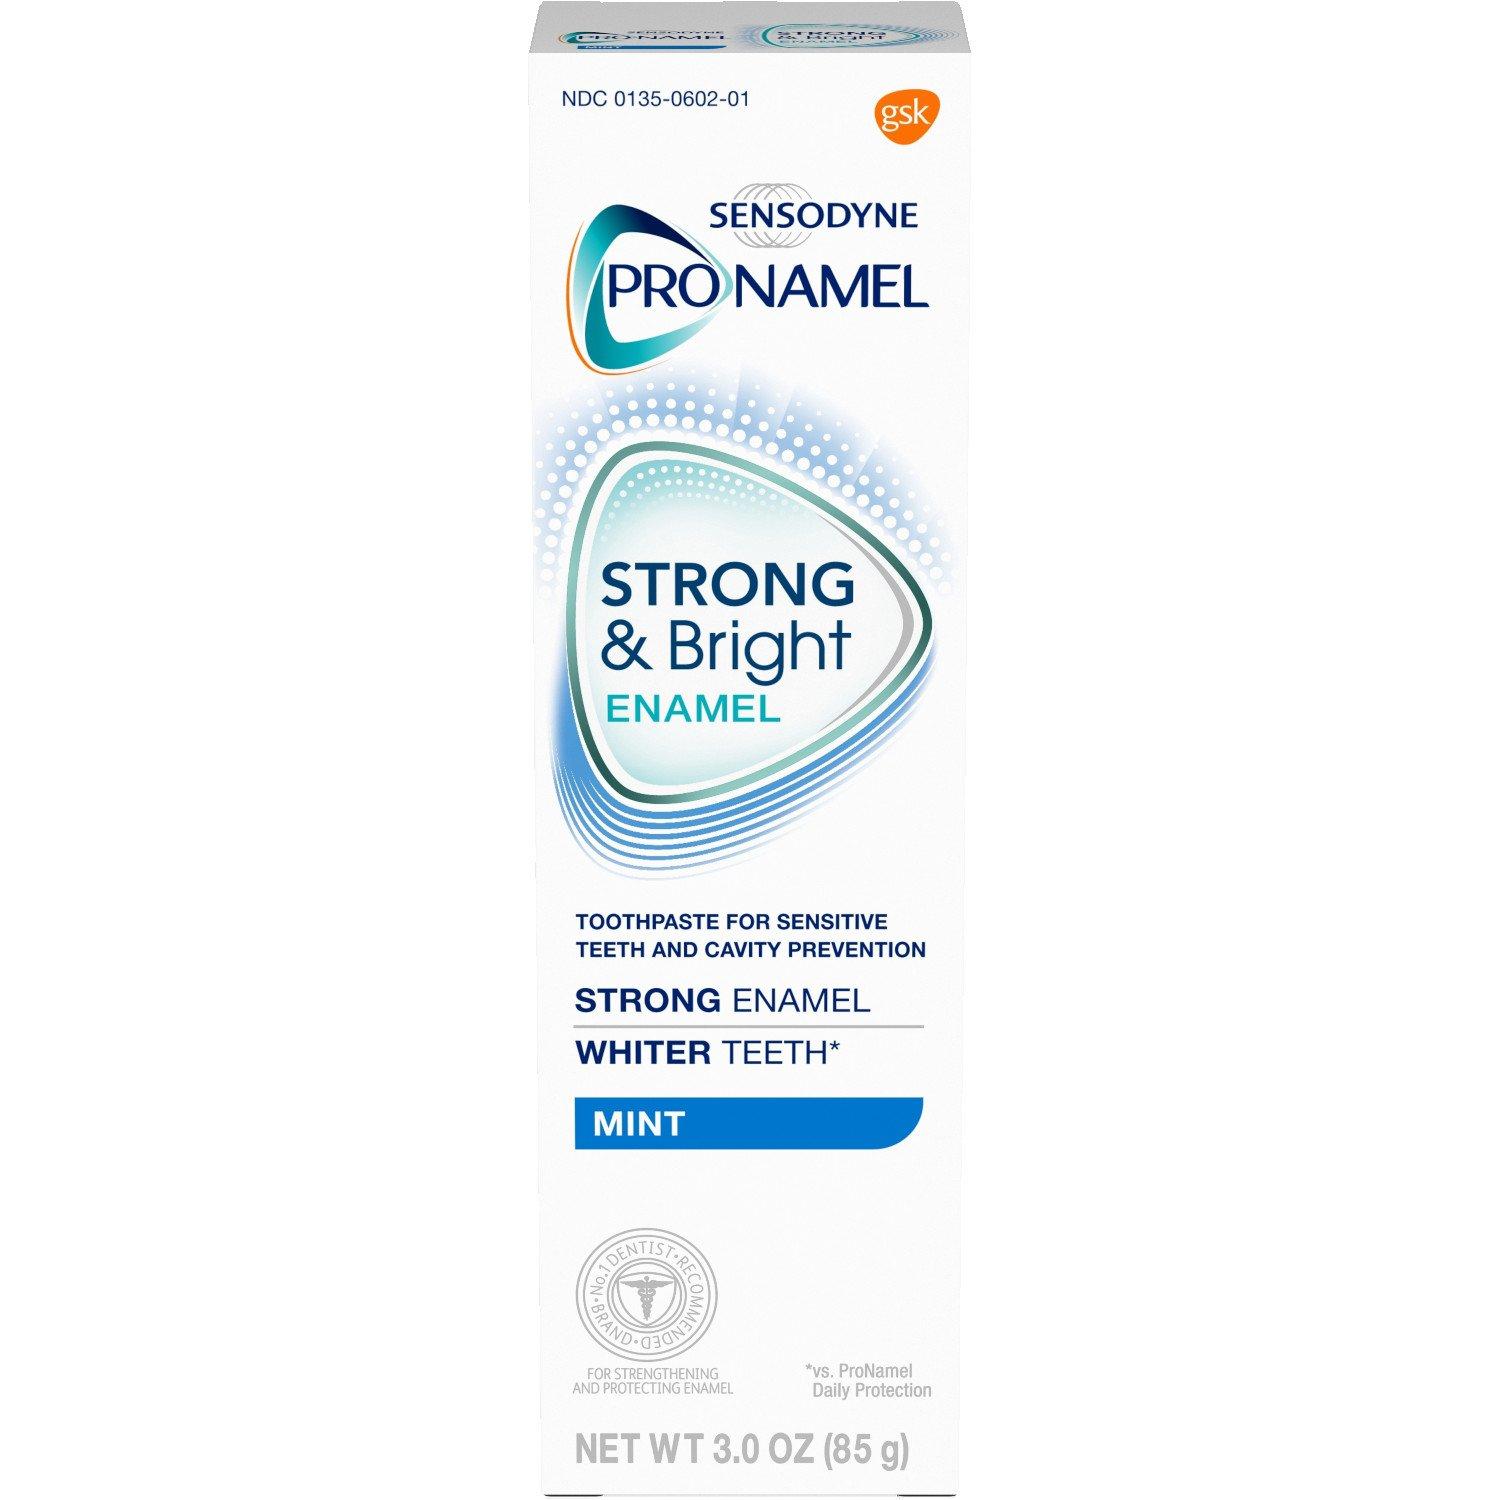 3oz Sensodyne Pronamel Strong and Bright Enamel Toothpaste for $2.85 Shipped